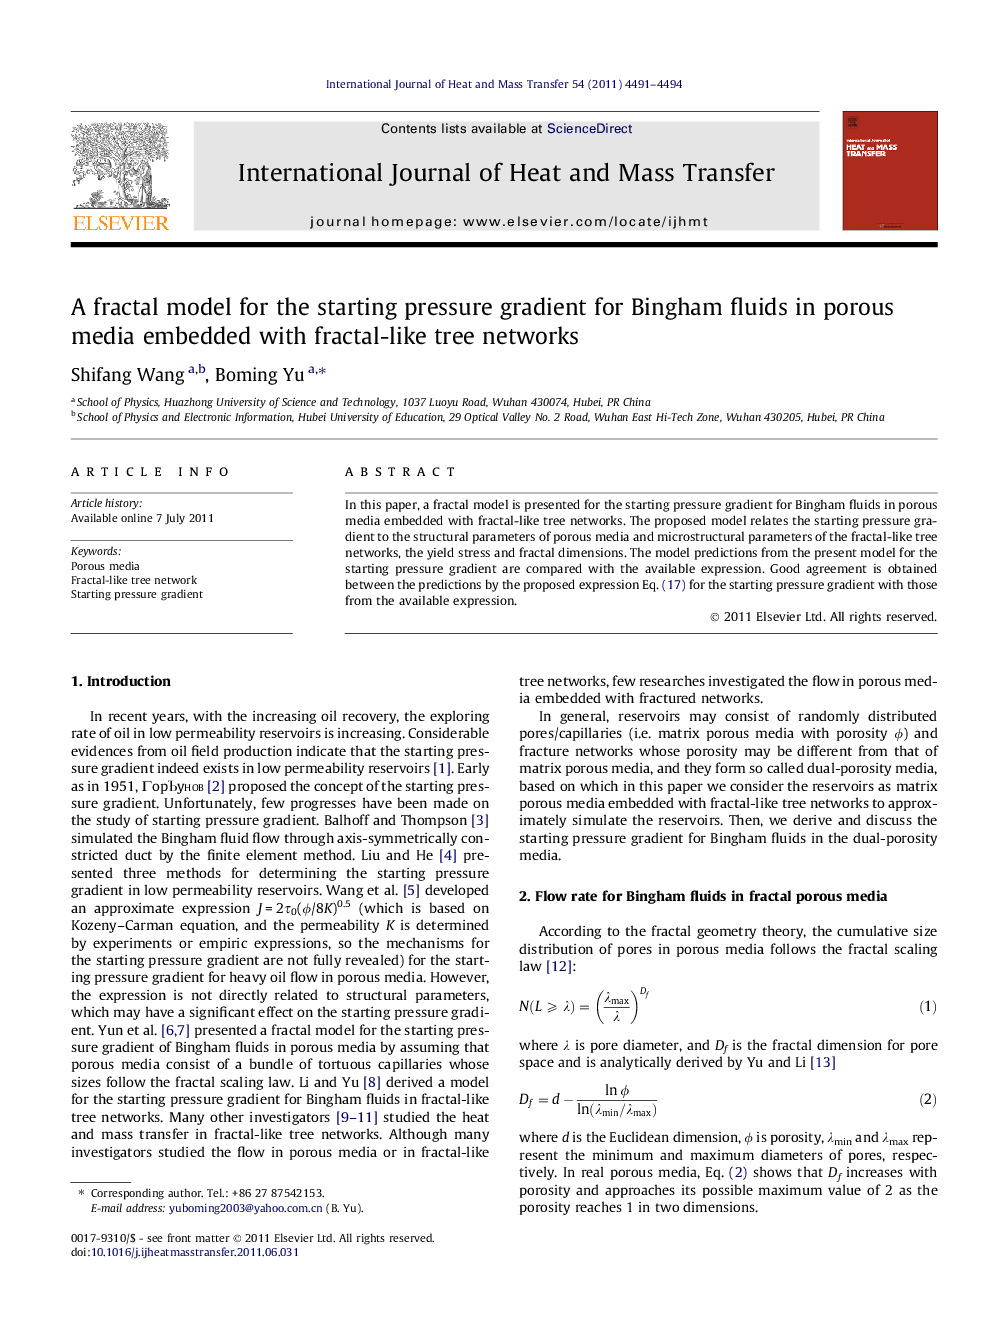 A fractal model for the starting pressure gradient for Bingham fluids in porous media embedded with fractal-like tree networks